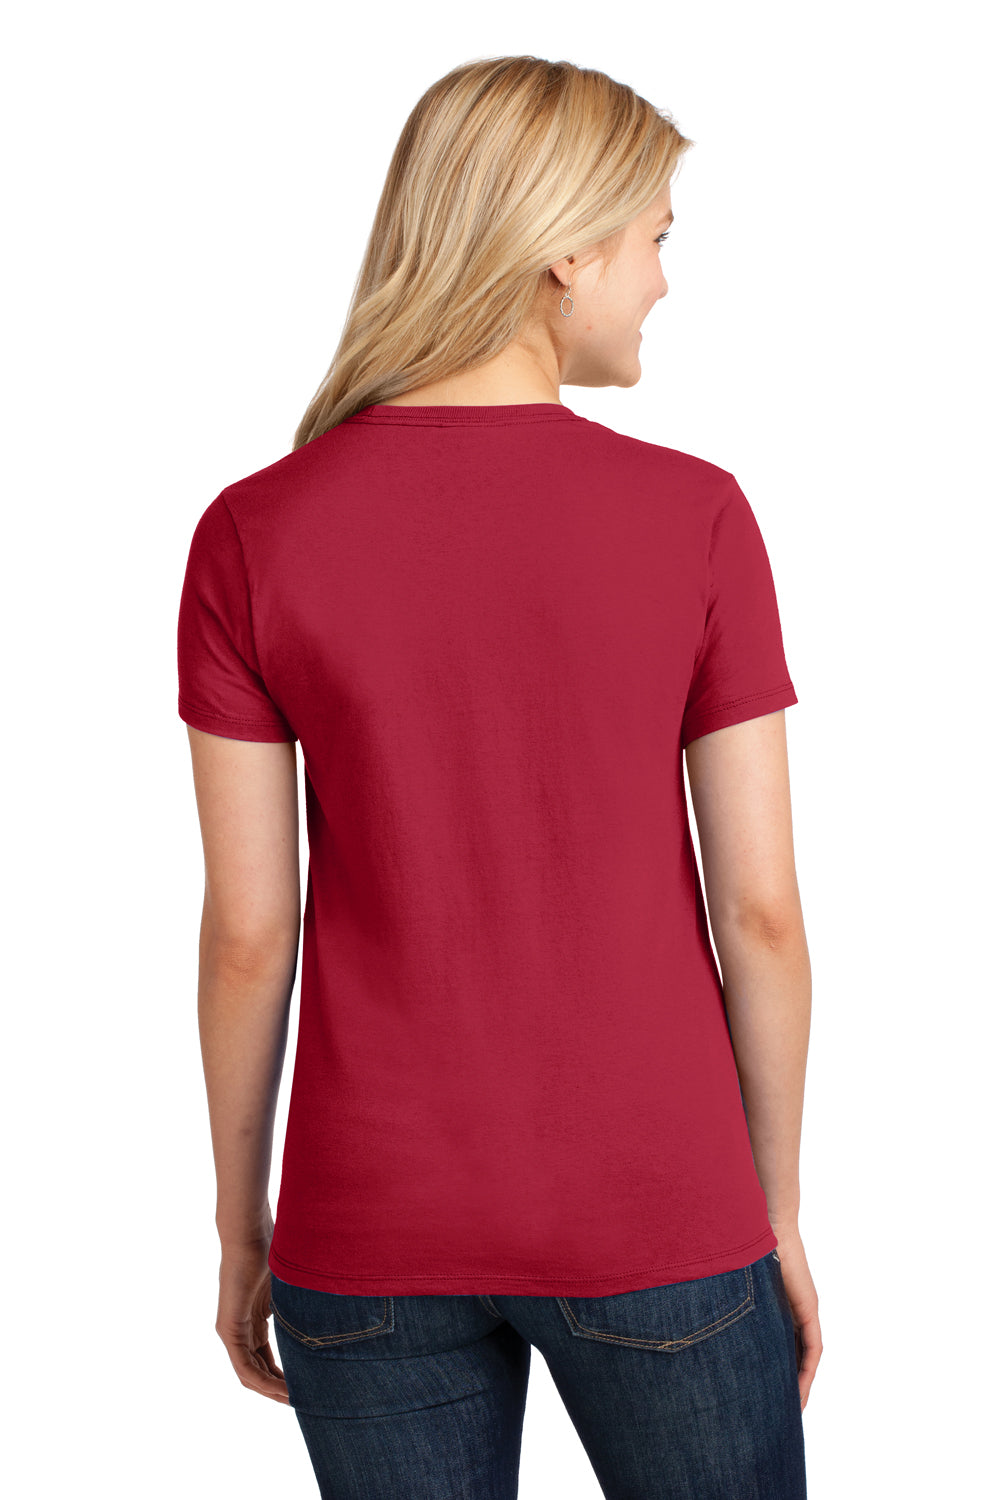 Port & Company LPC54 Womens Core Short Sleeve Crewneck T-Shirt Red Back